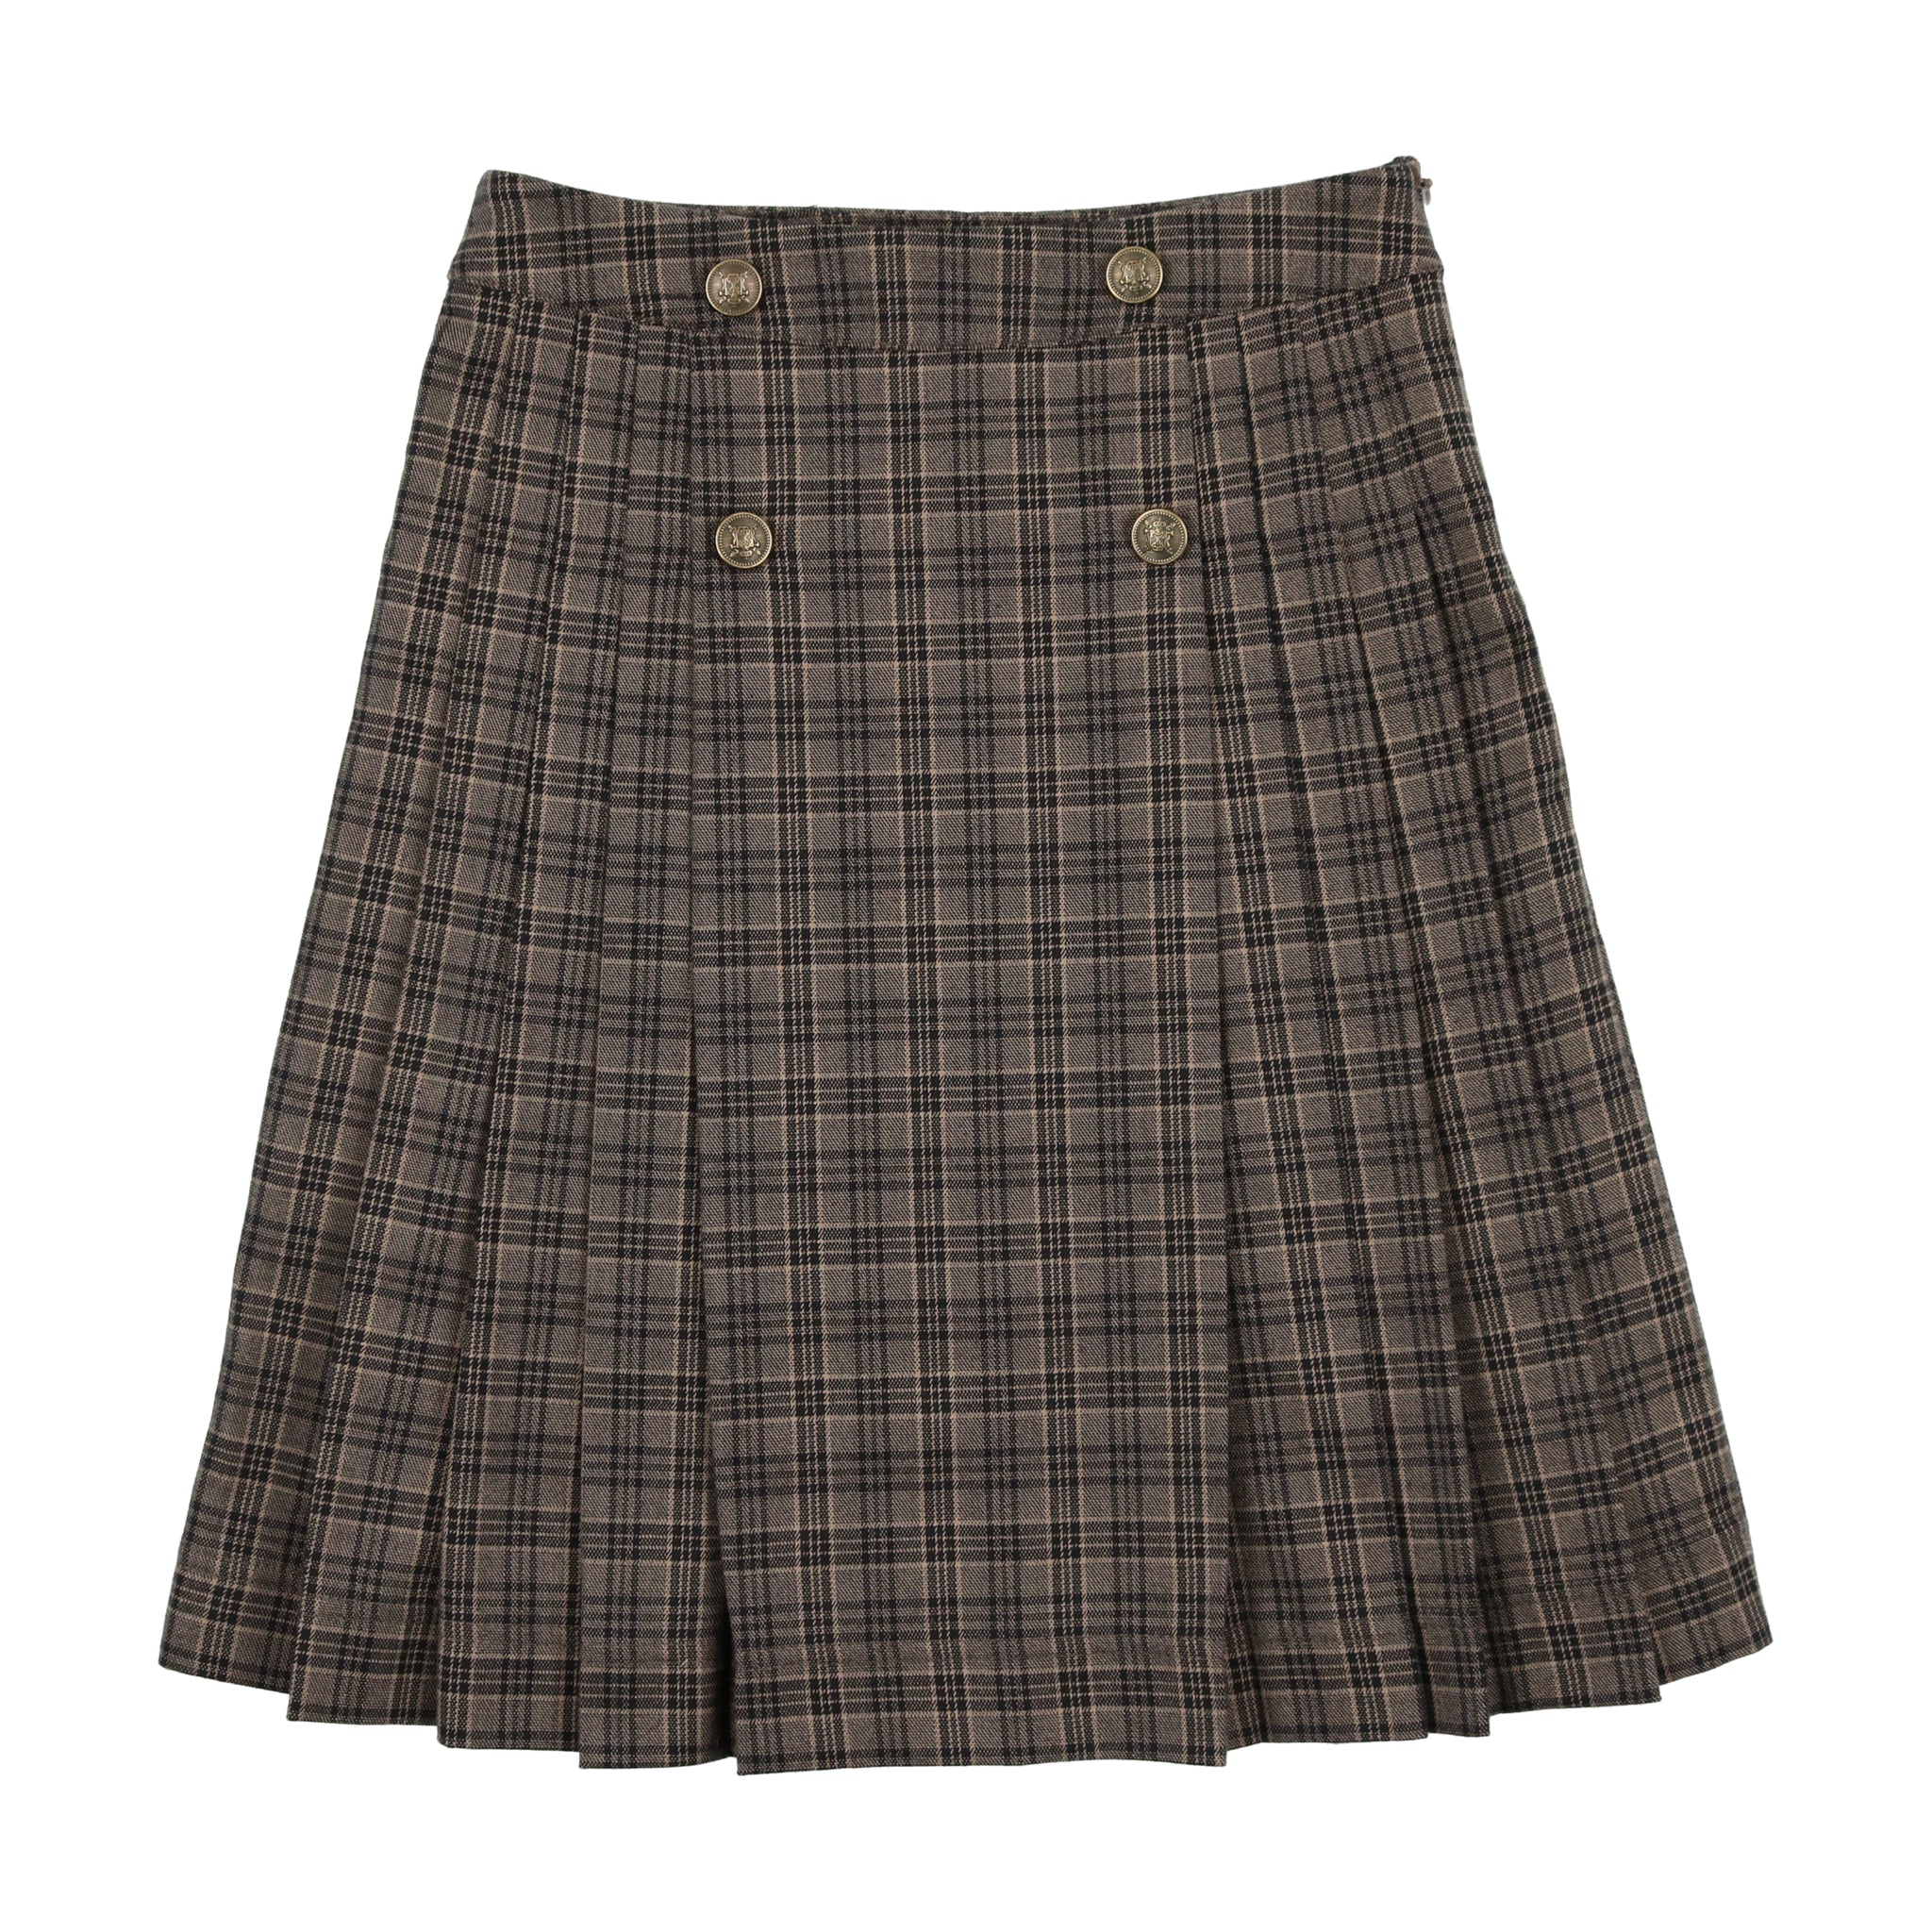 Analogie Navy/Brown Plaid Pleated Skirt